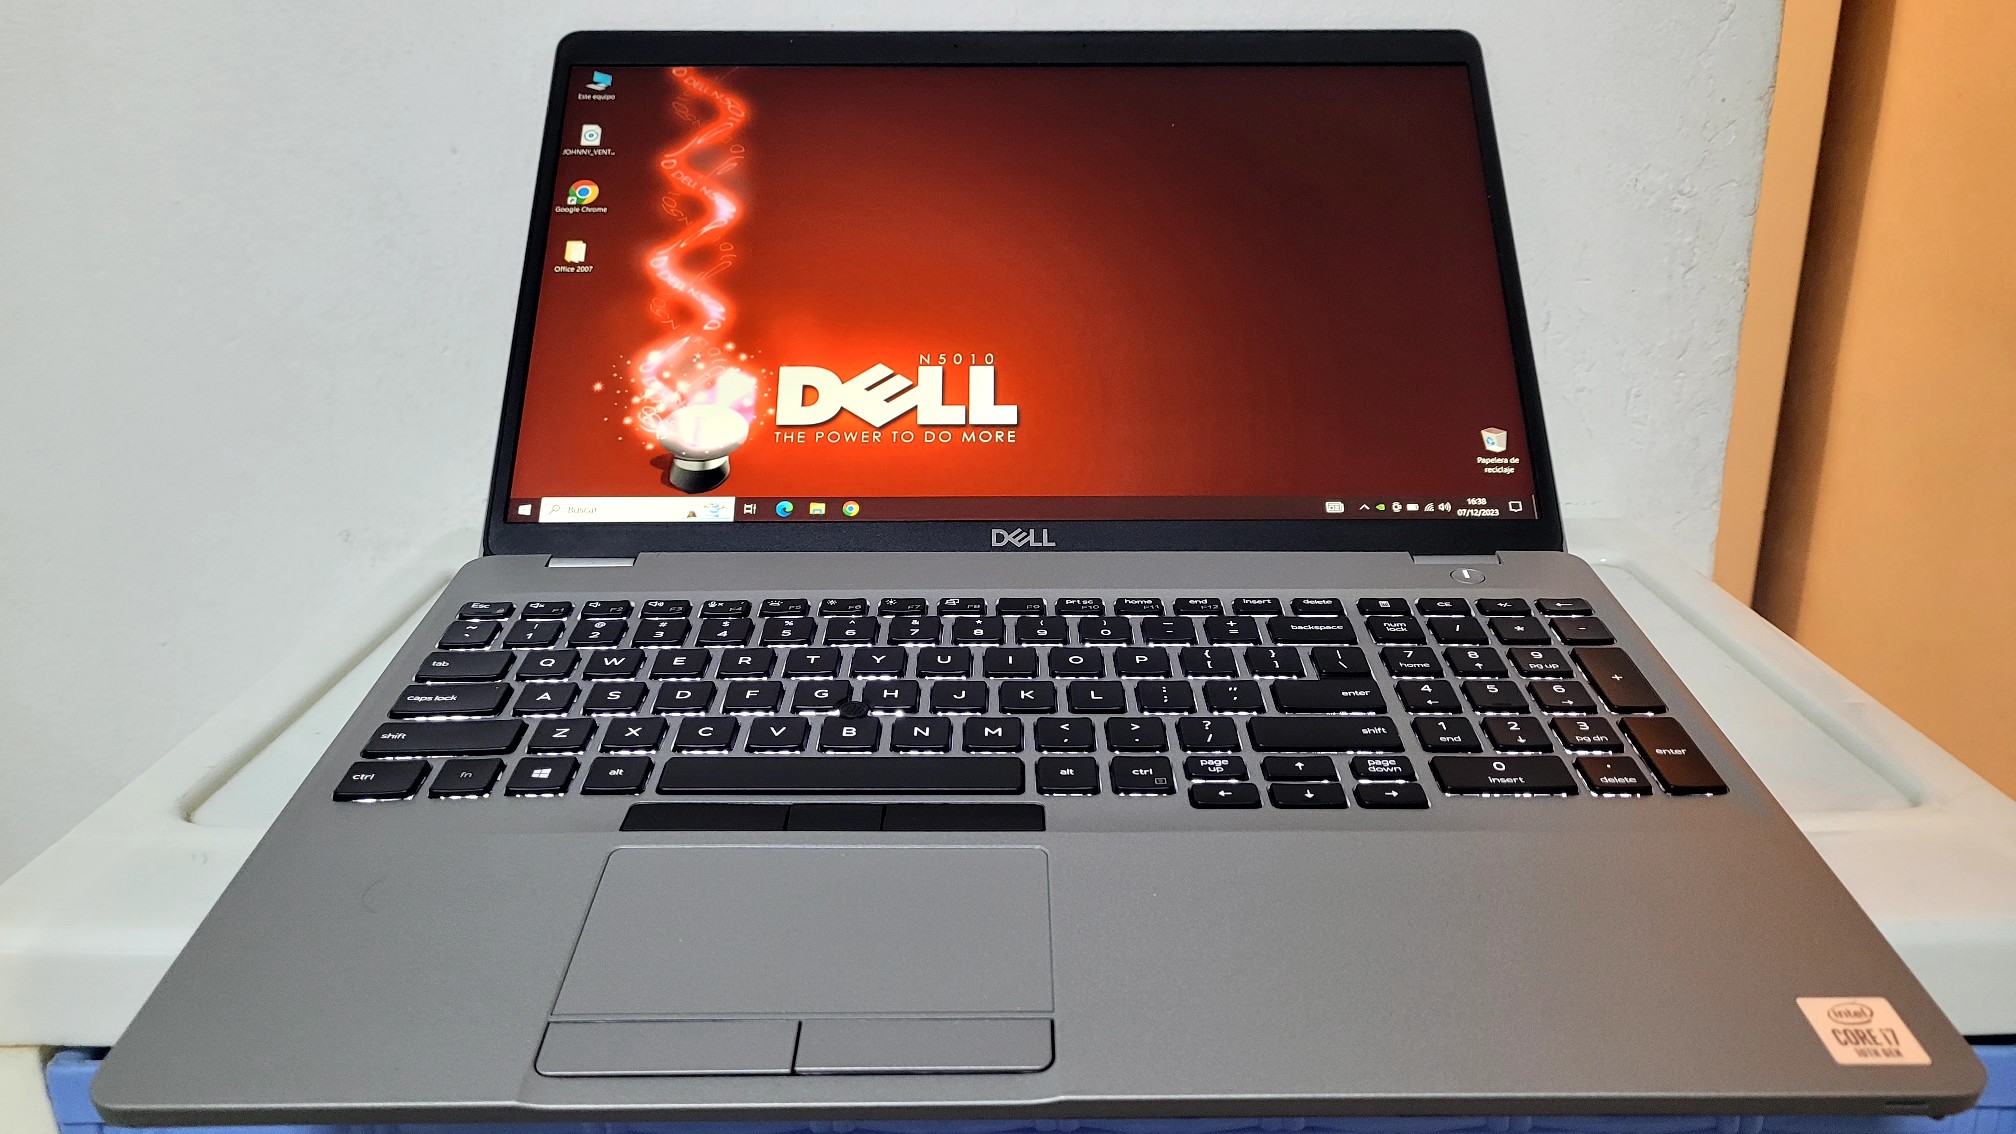 computadoras y laptops - Dell Precision 17 Pulg Core i7 10th Gen Ram 16gb ddr4 Nvidea p520 2gb Dedicada